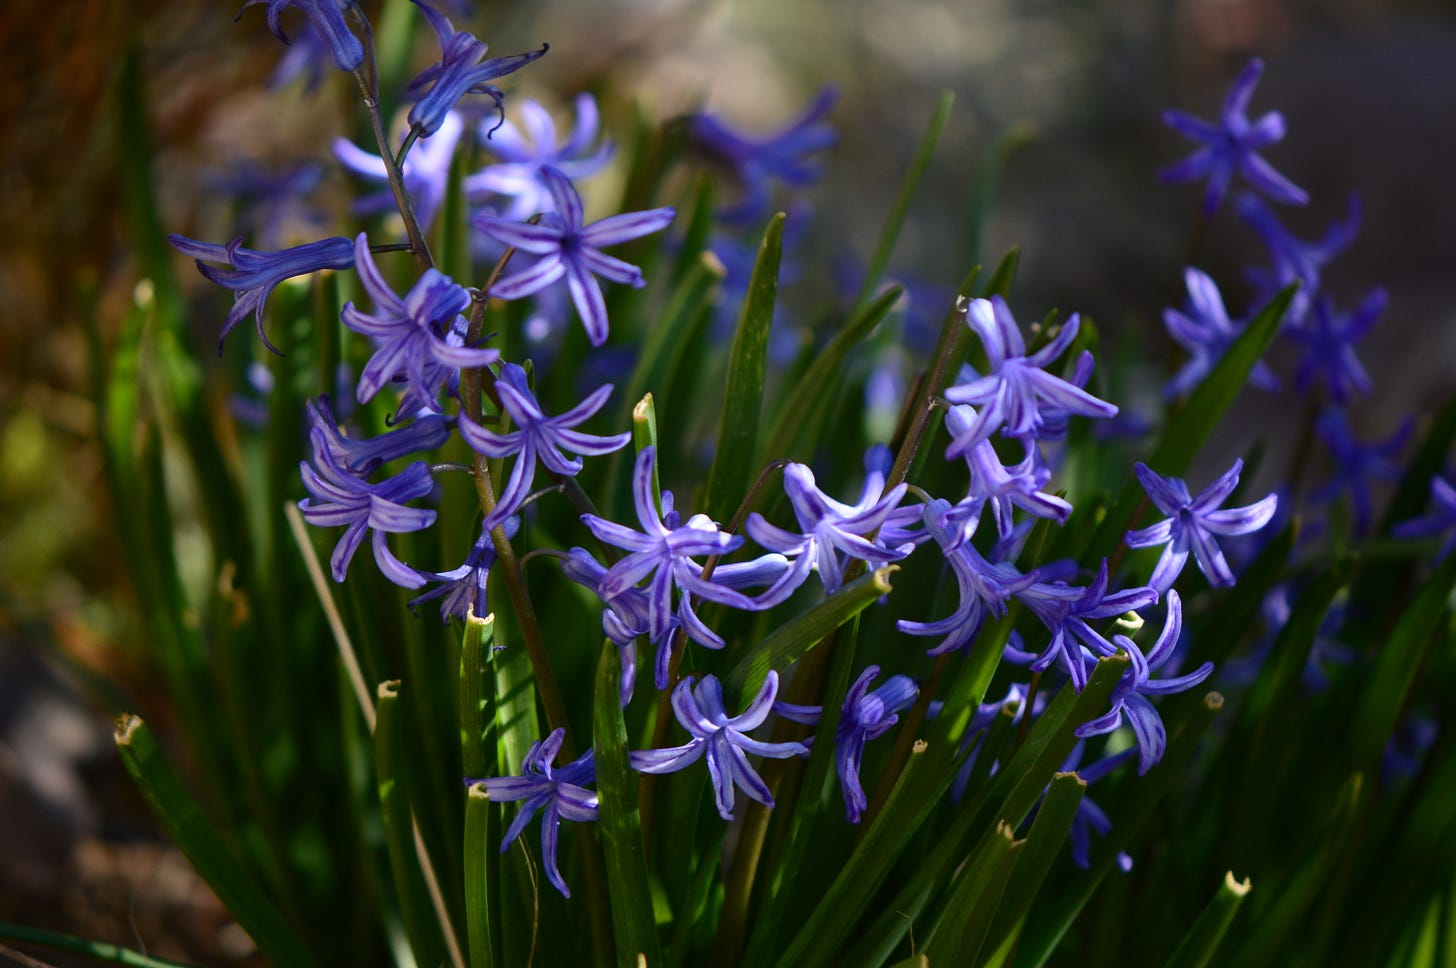 a dense, floriferous stand of Roman hyacinths